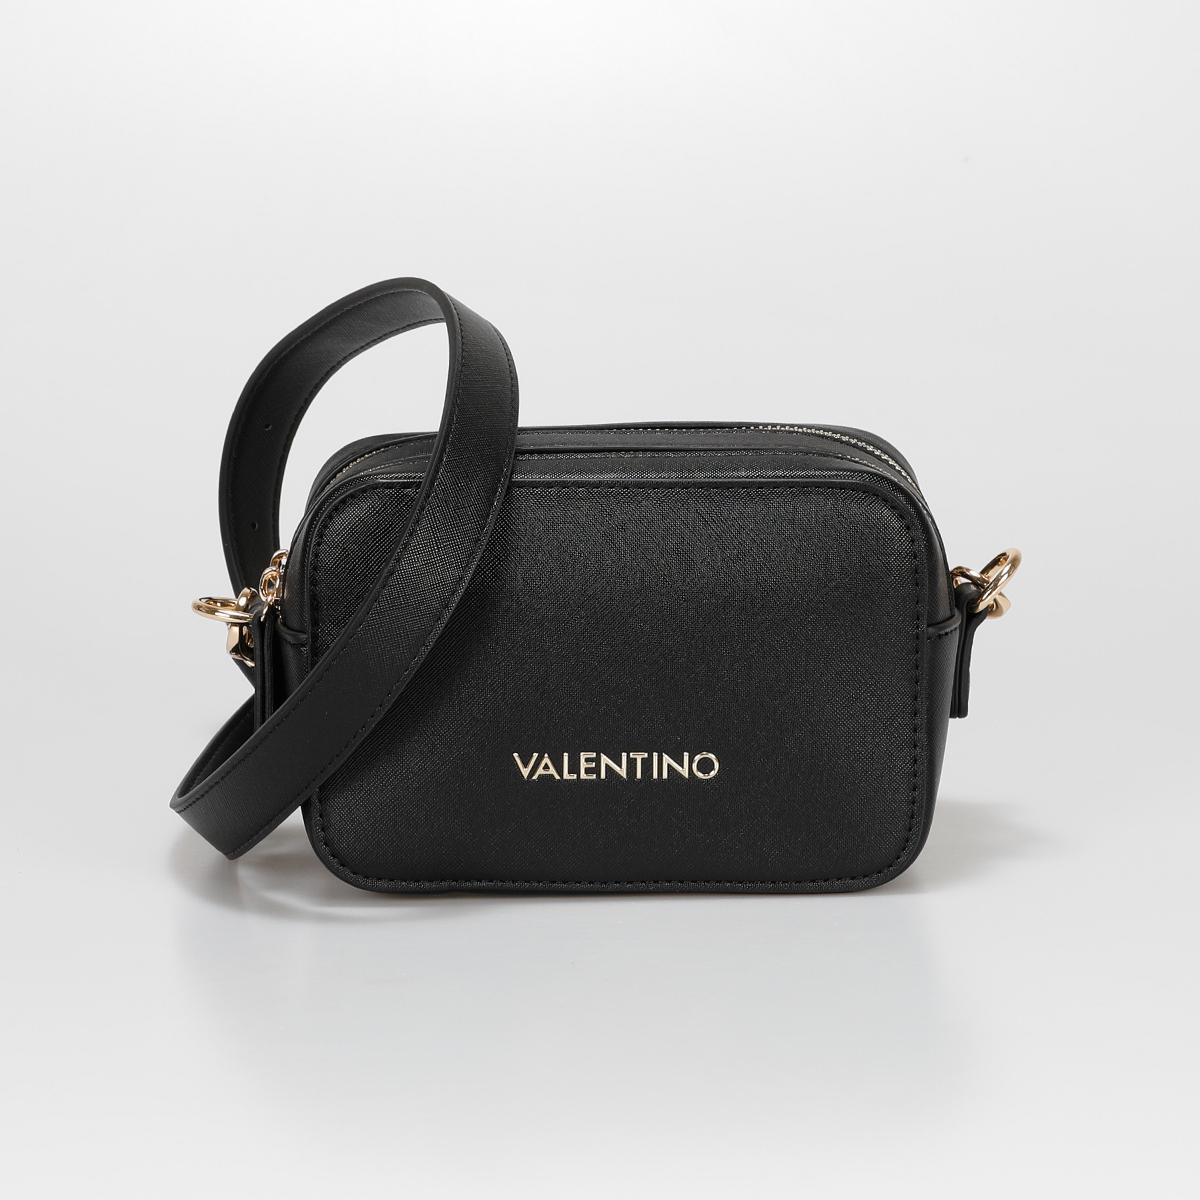 Valentino Zero Re ჩანთა | ICR | Online მაღაზია